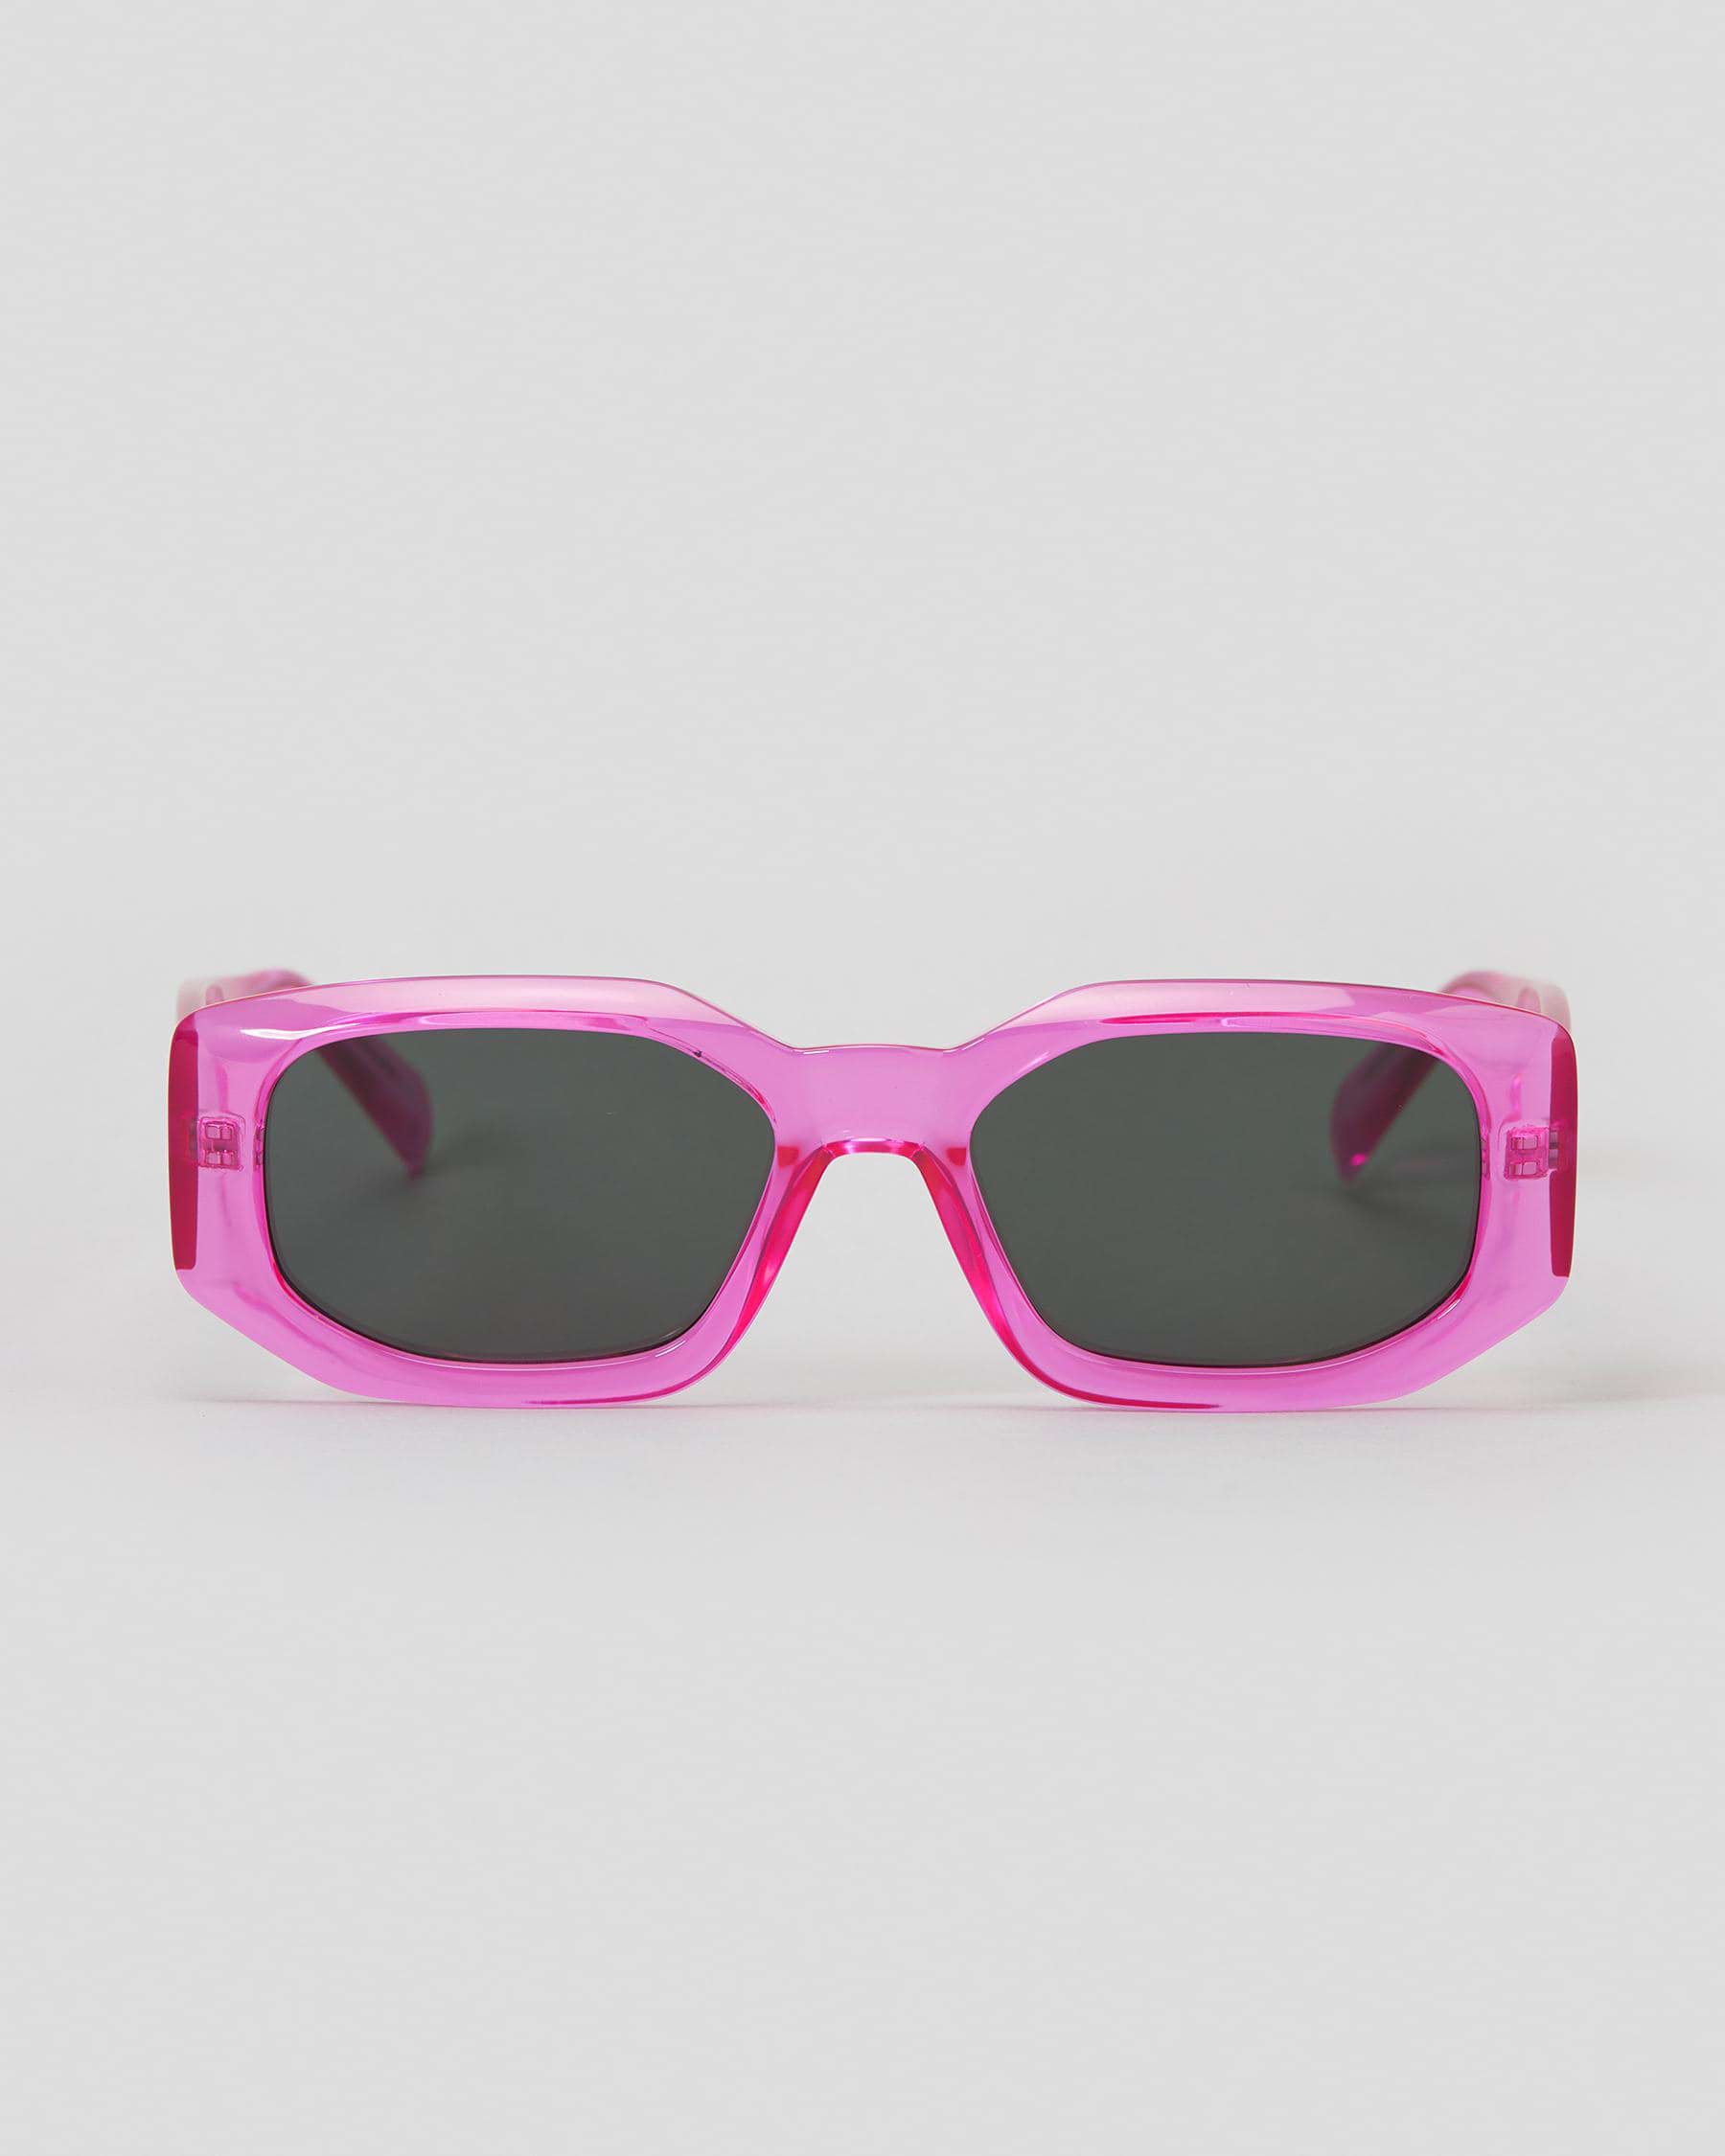 Discover 169+ mayhem sunglasses